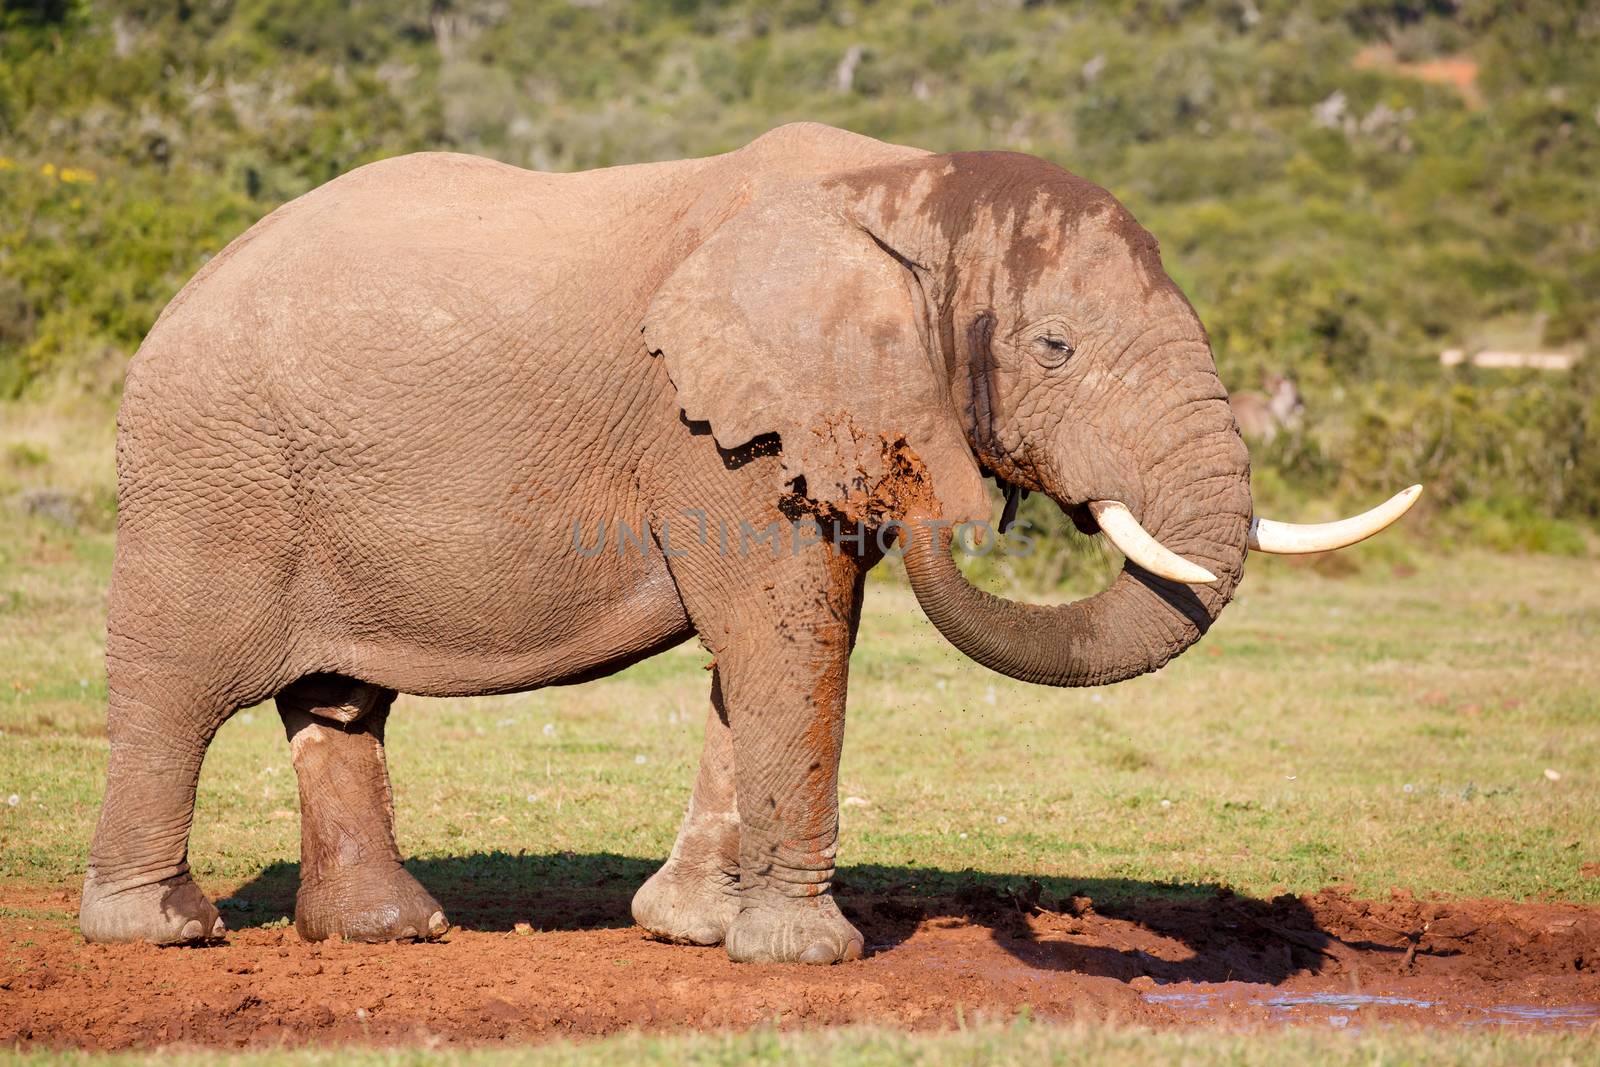 Elephant having Mud Bath by fouroaks